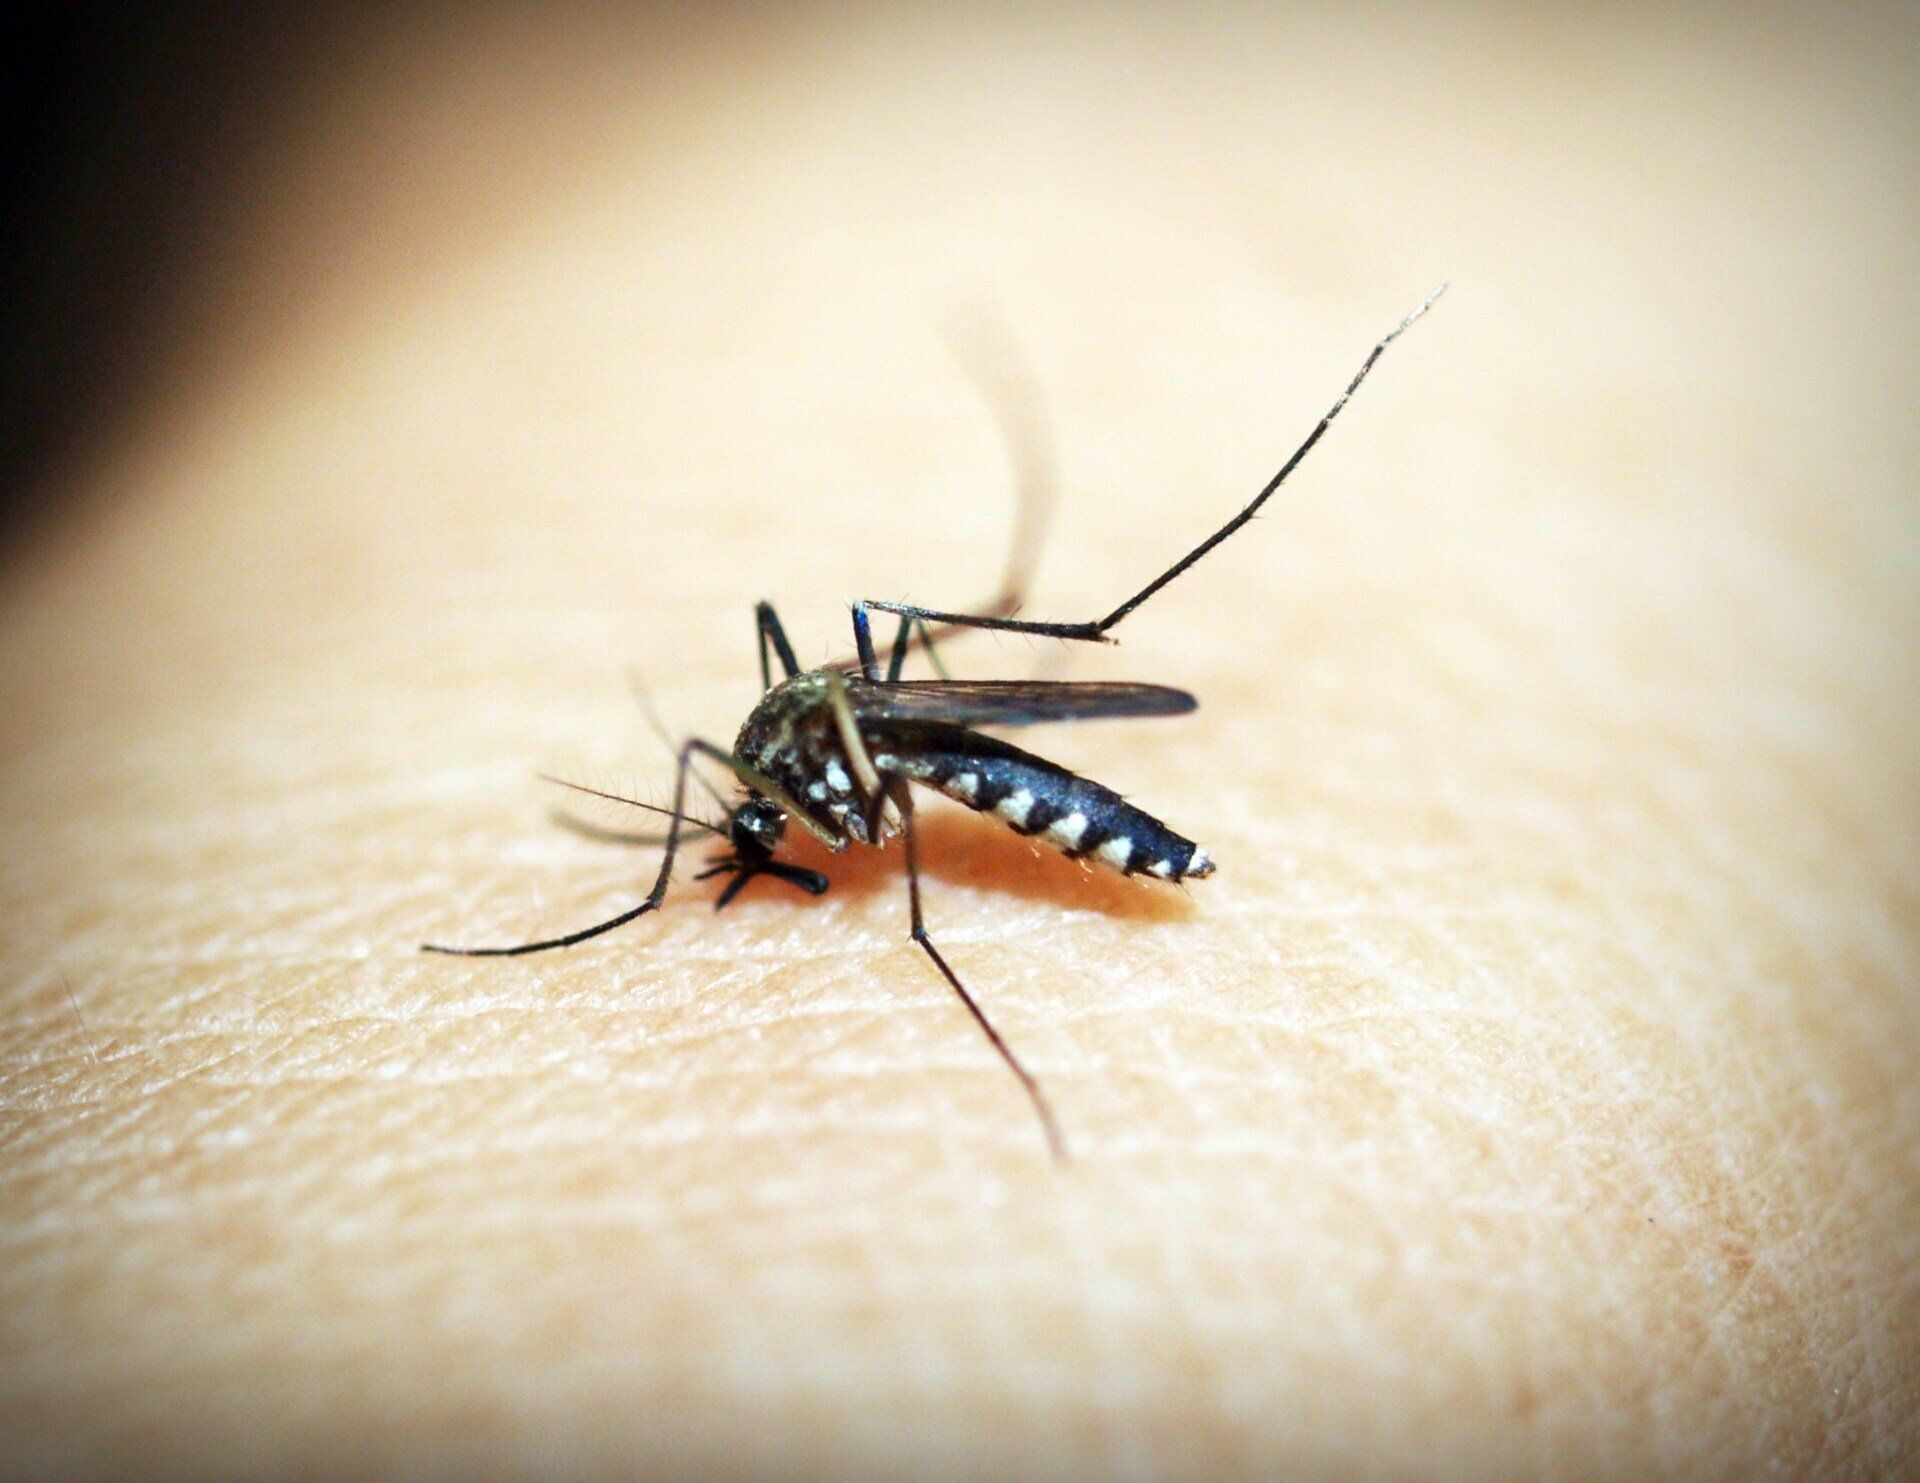 mosquito feeding on human